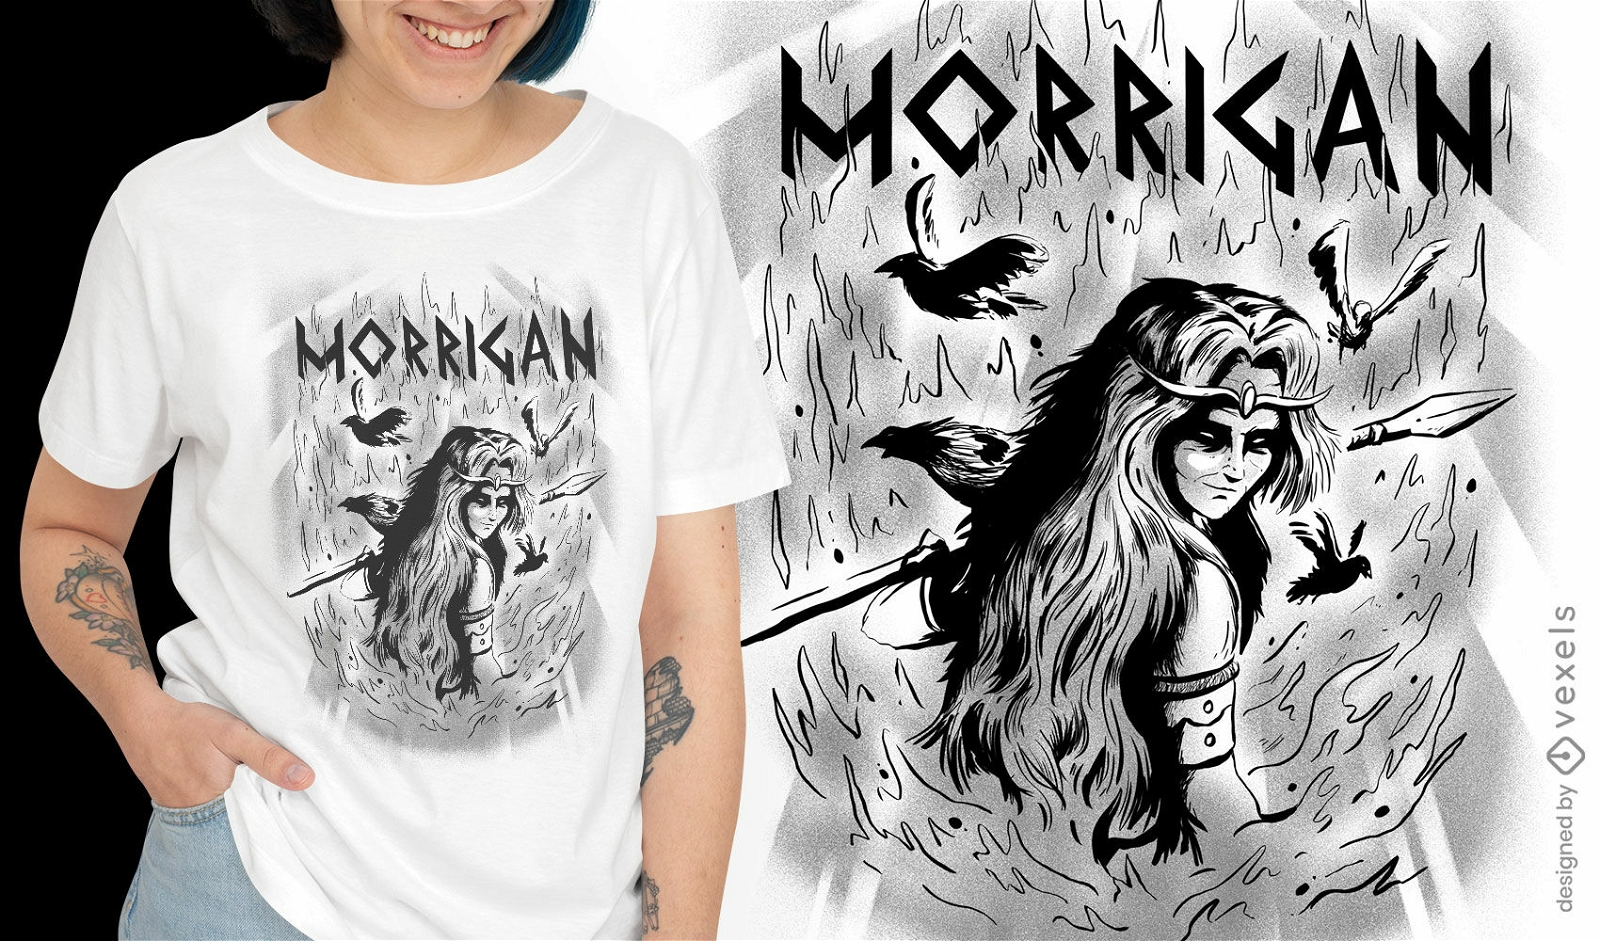 Celtic warrior woman creature t-shirt design